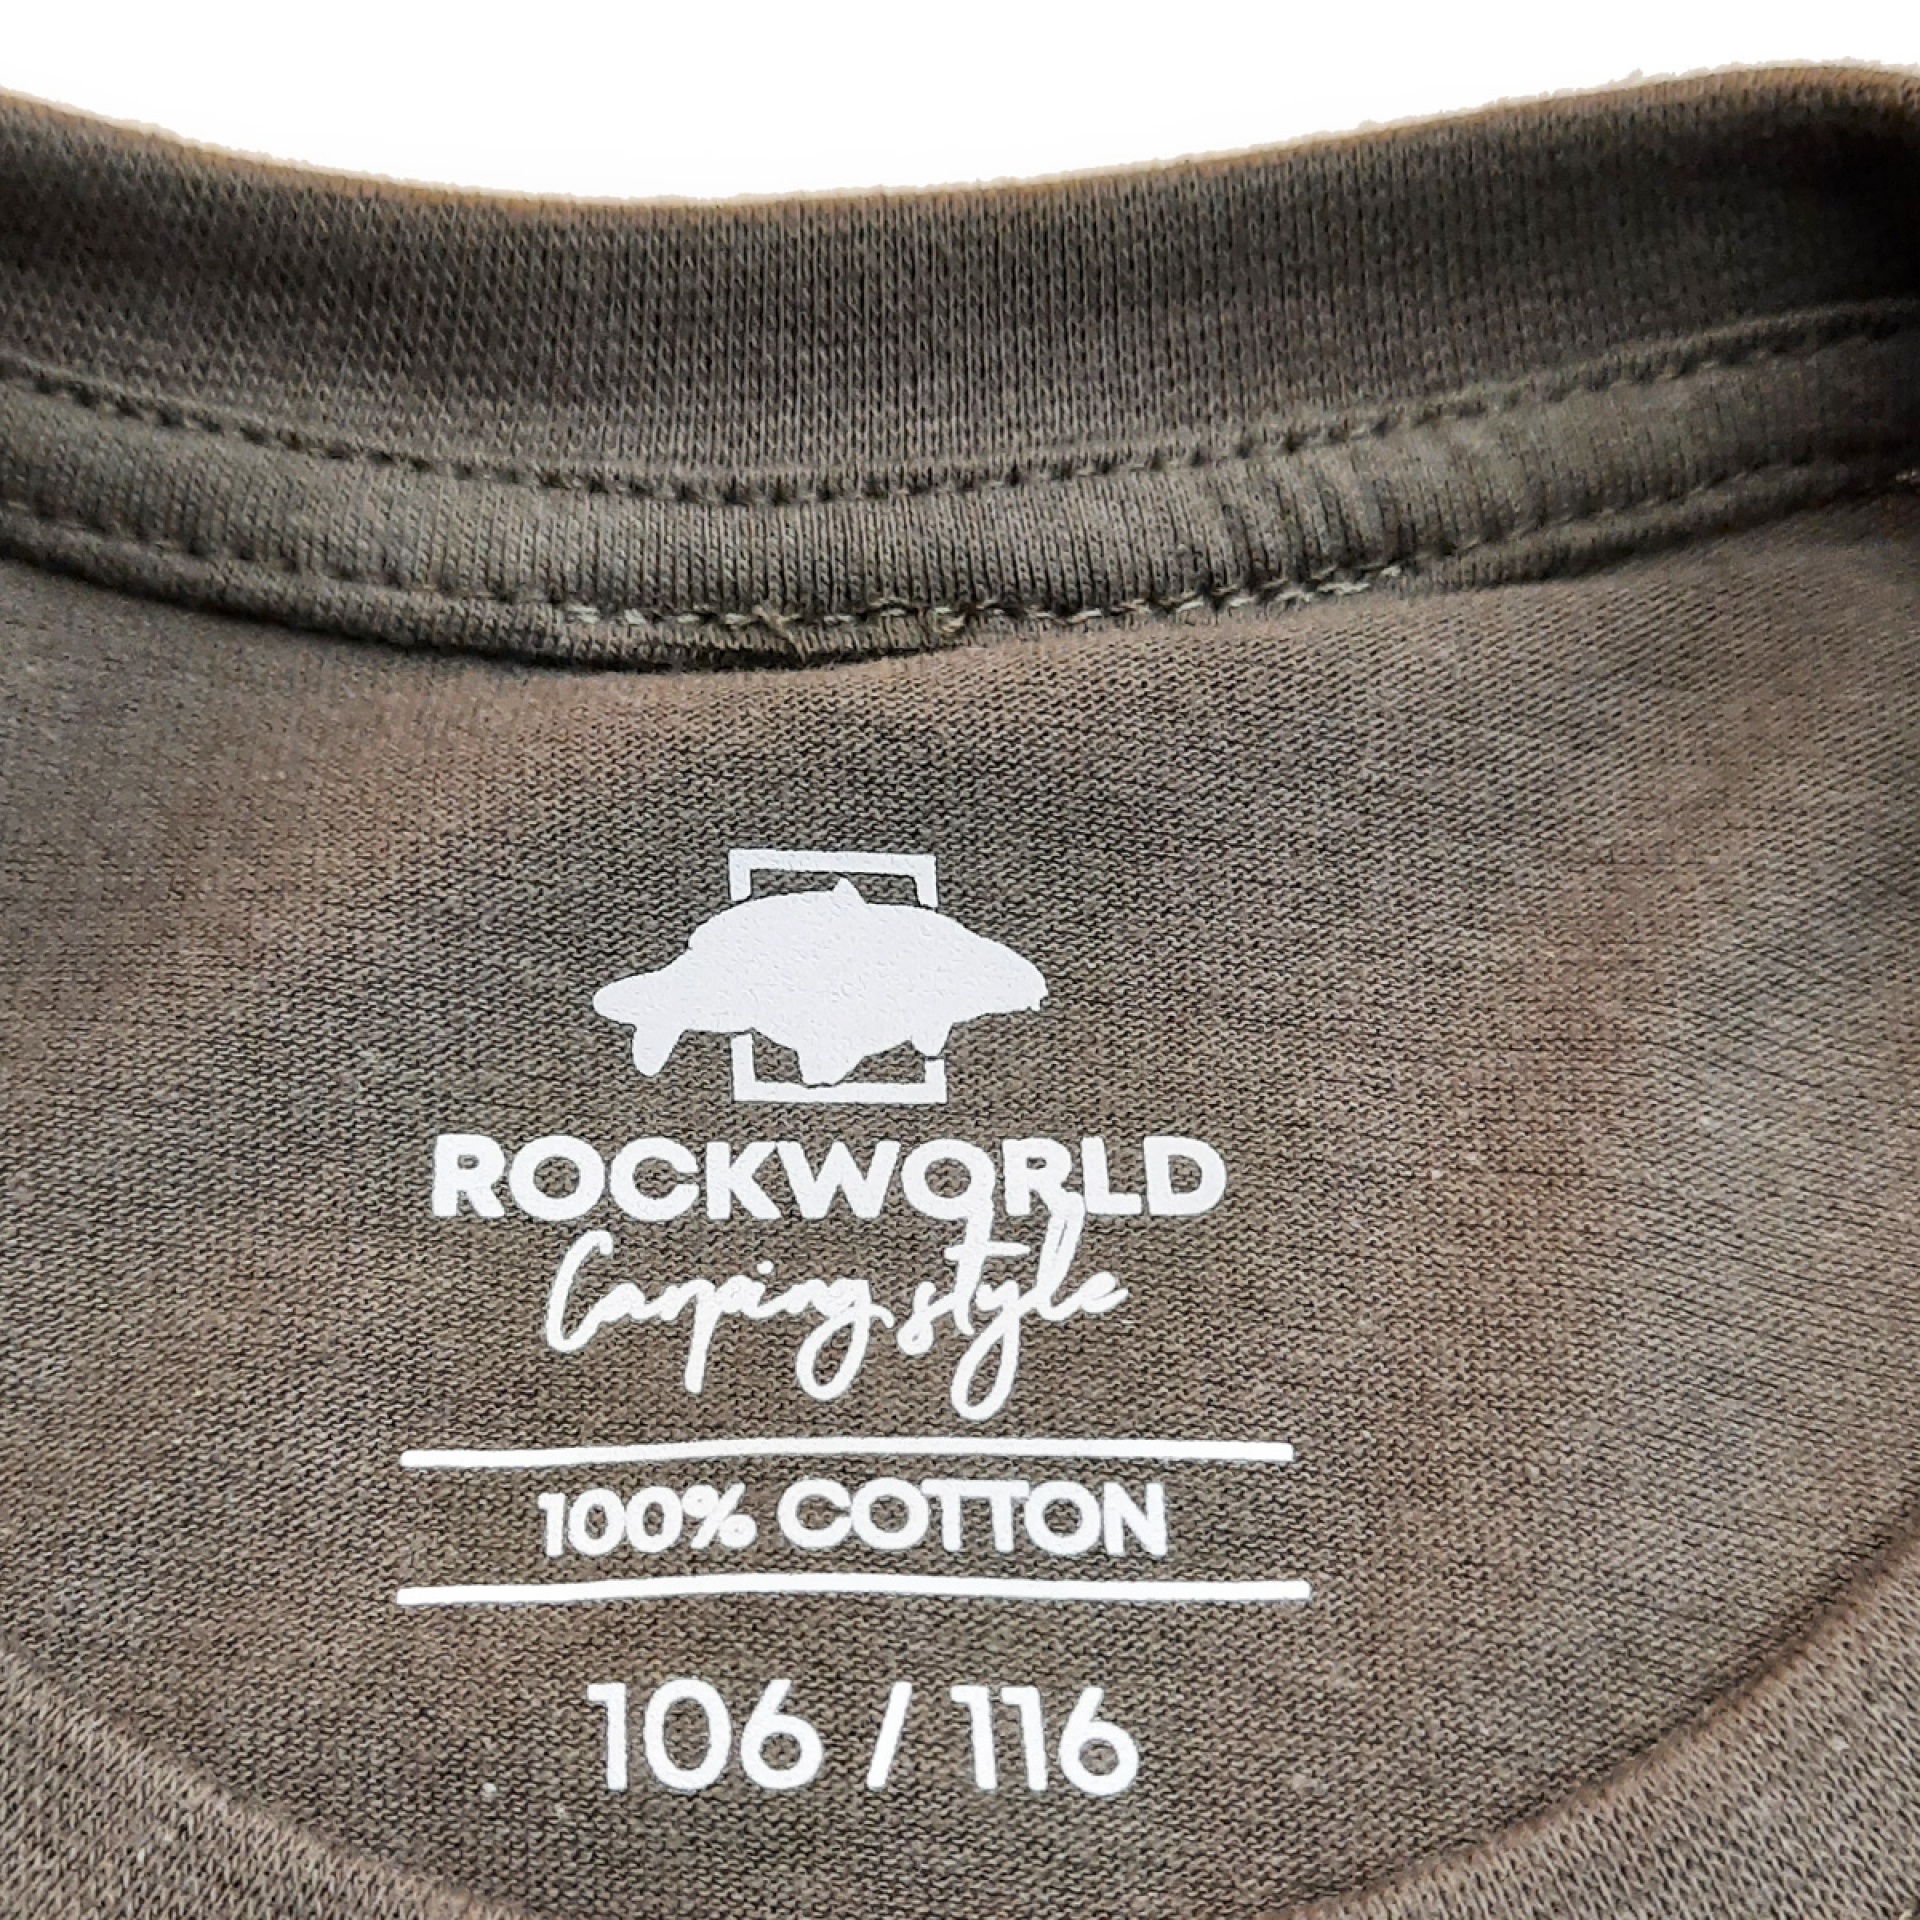 Rockworld Carping Style - Camiseta infantil color caqui